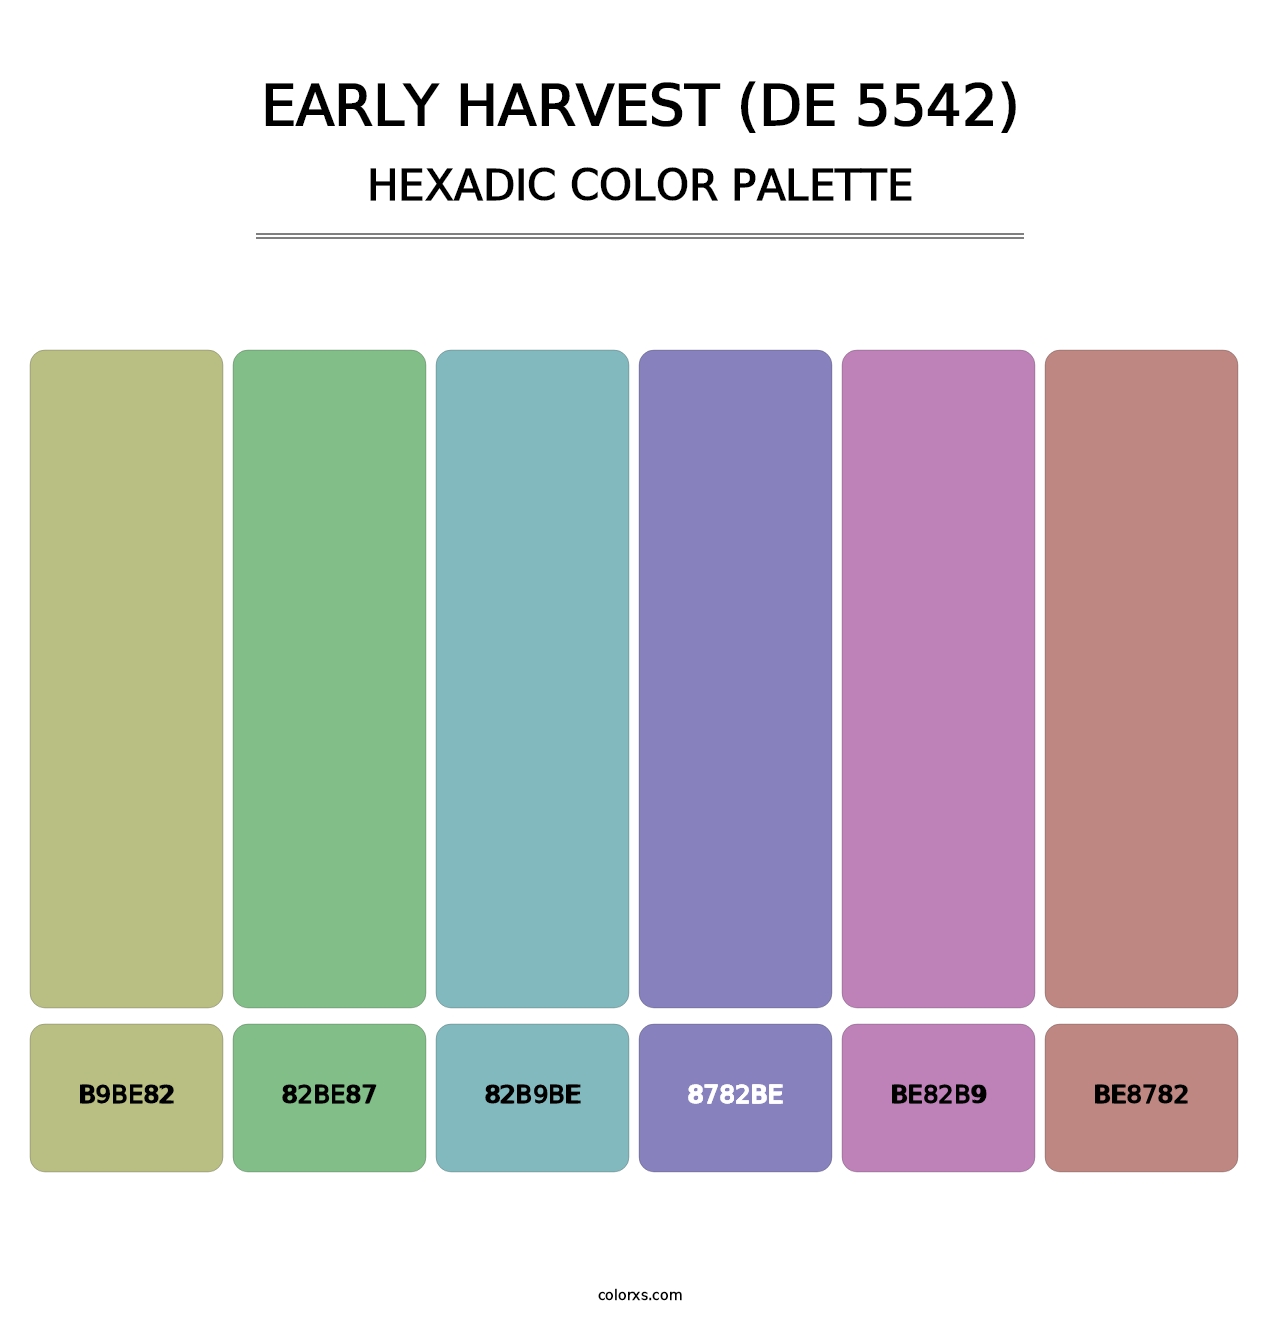 Early Harvest (DE 5542) - Hexadic Color Palette